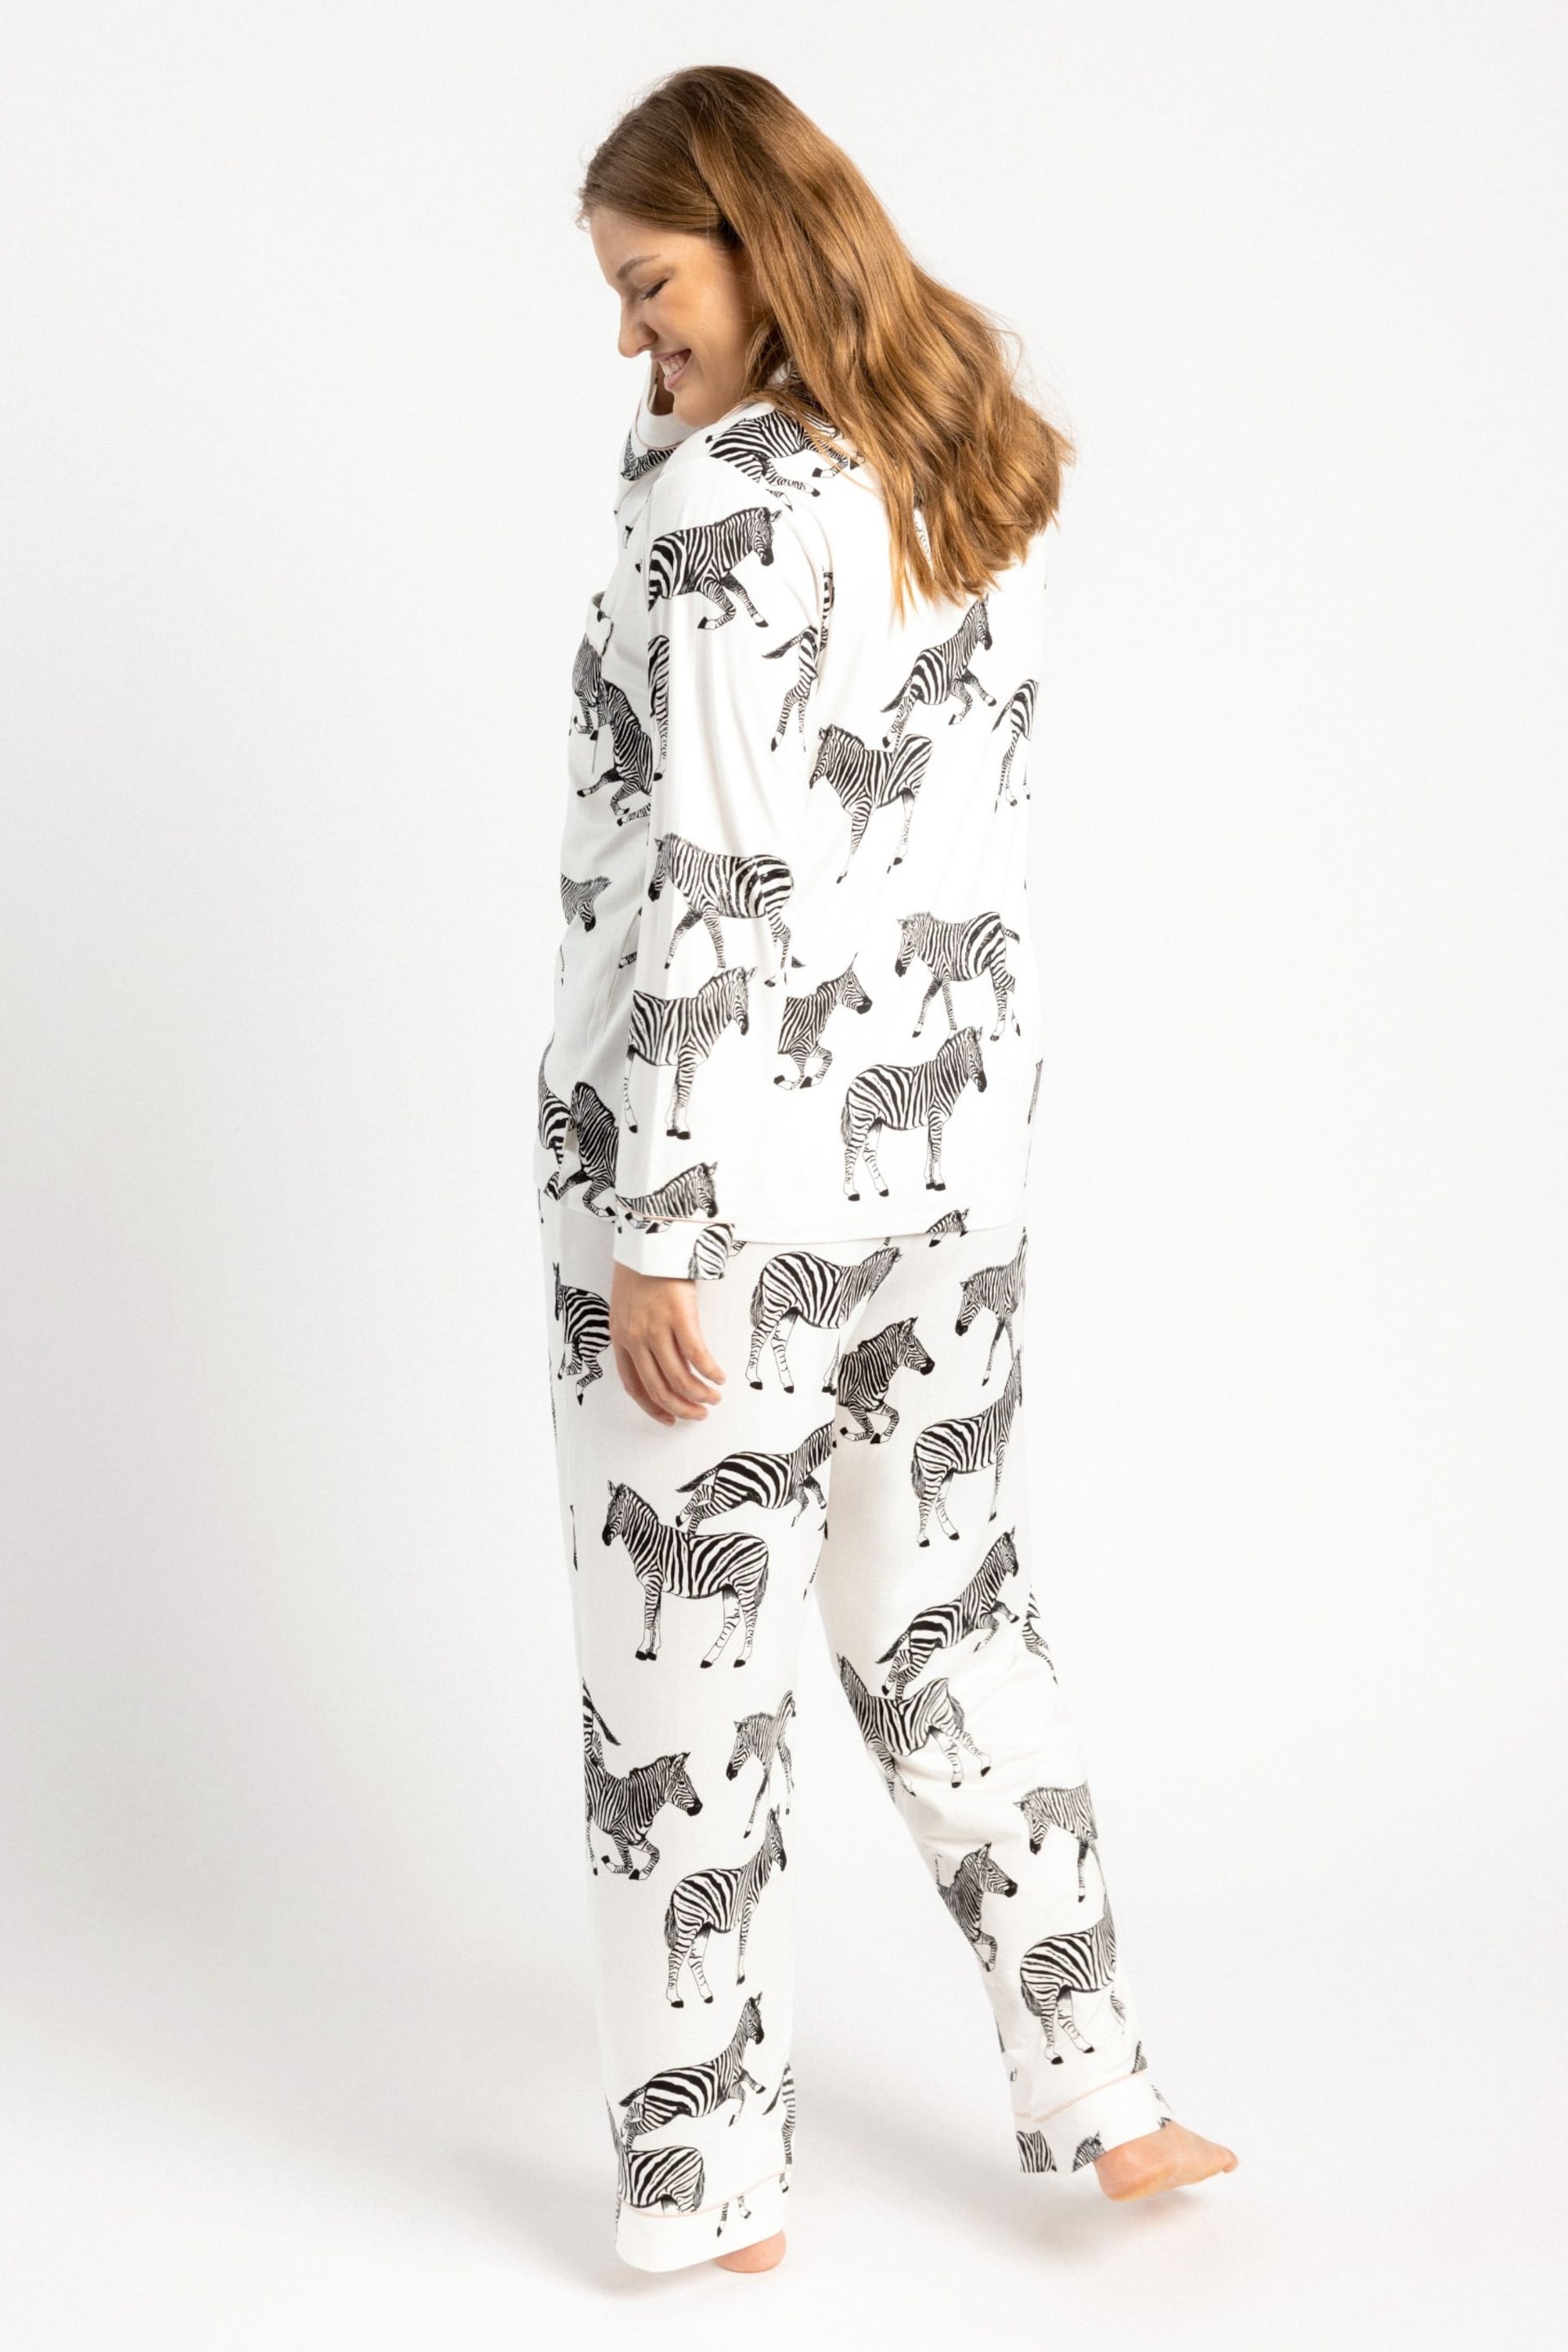 Chelsea Peers Cream Curve Zebra Button Up Pyjamas Set - Image 2 of 6